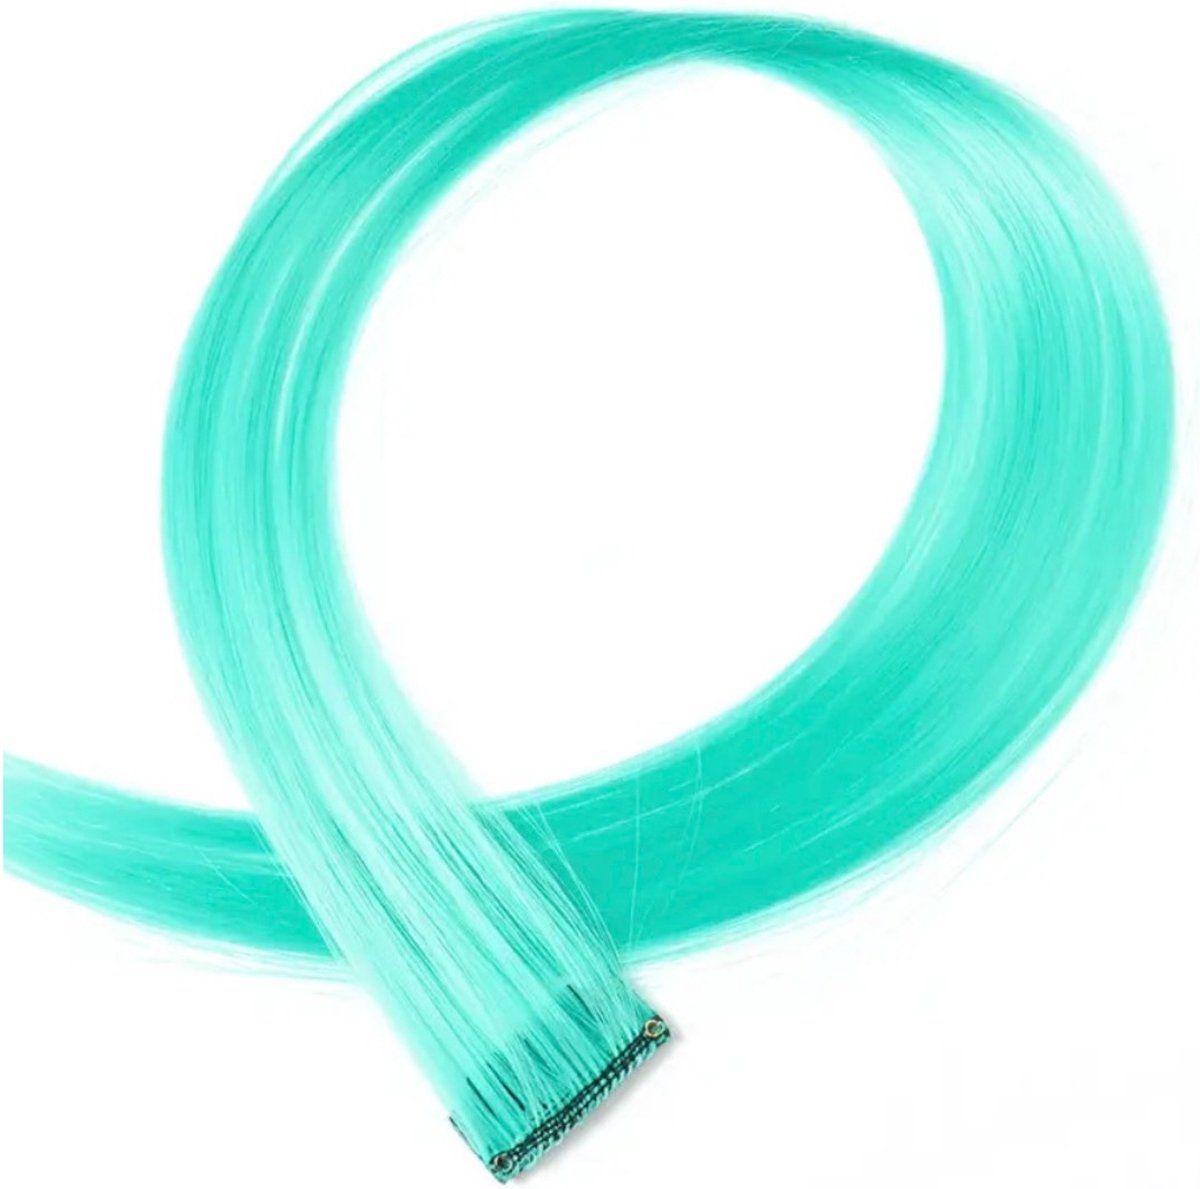 Clip in hair extension Turqouise - plukje haar turquoise - haar extention zee groen - clip in plukje haar turquoise - nep haar plukje - haar extension